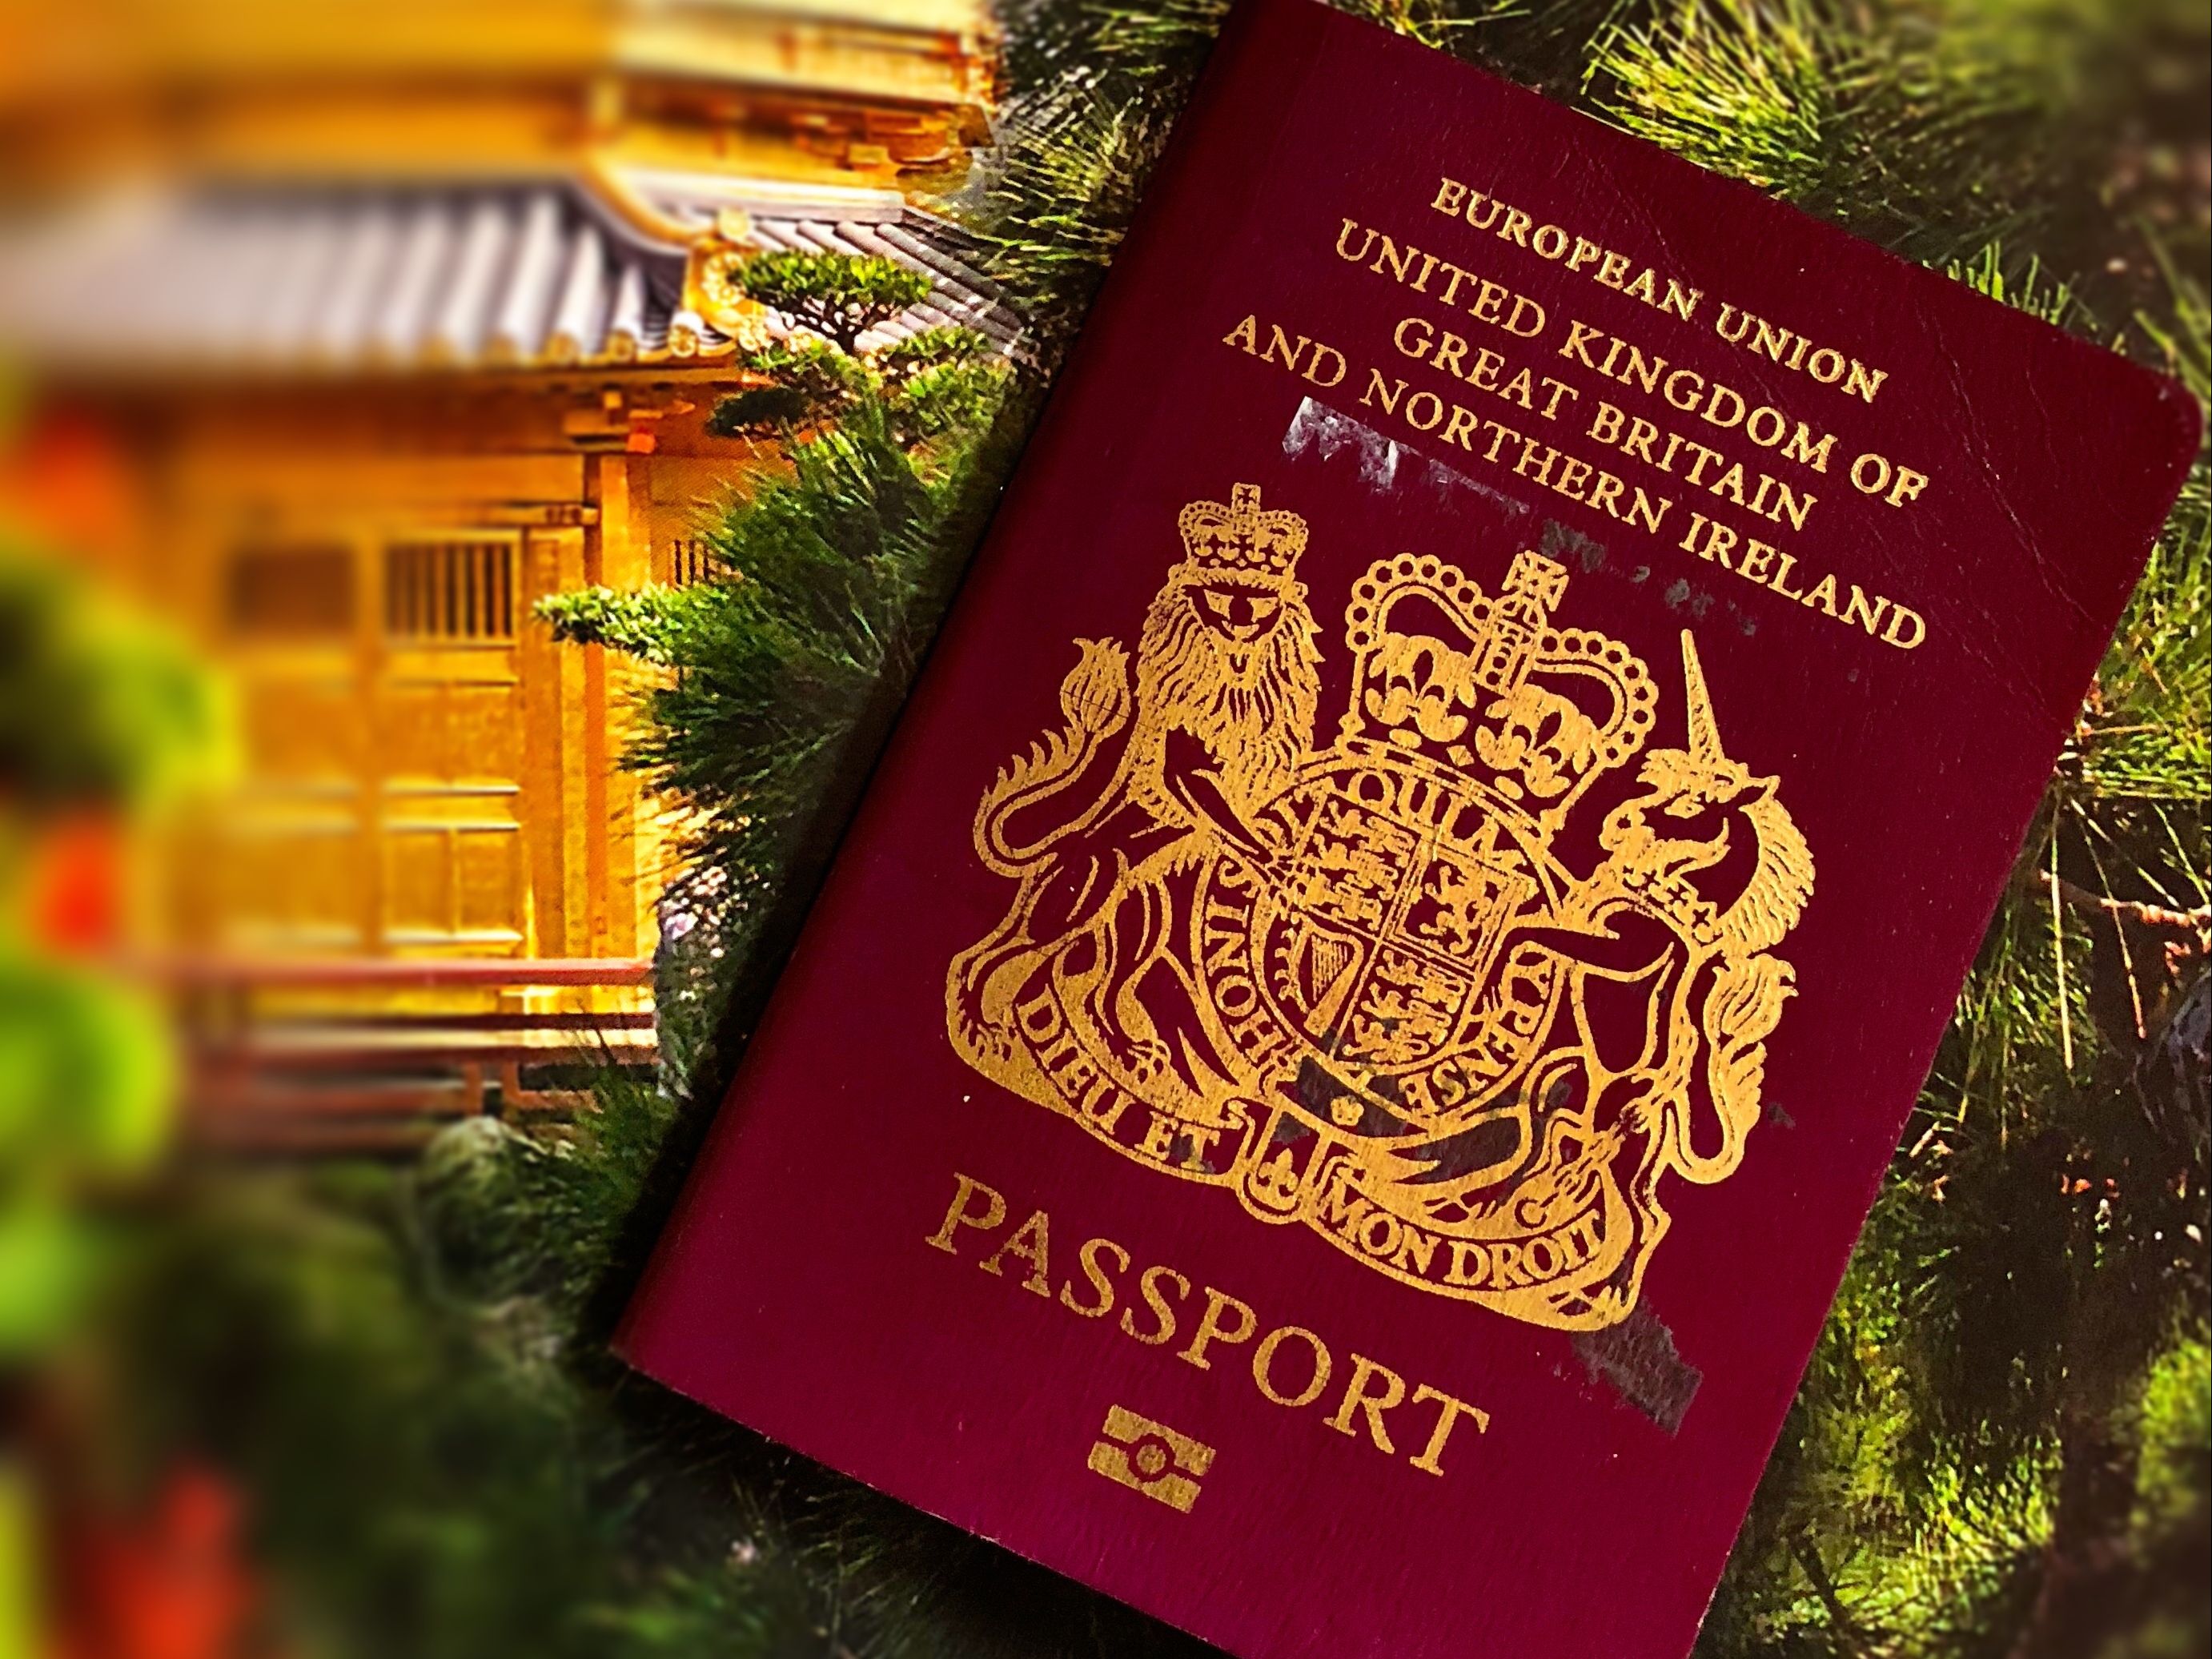 Passport stamps - do you value them?